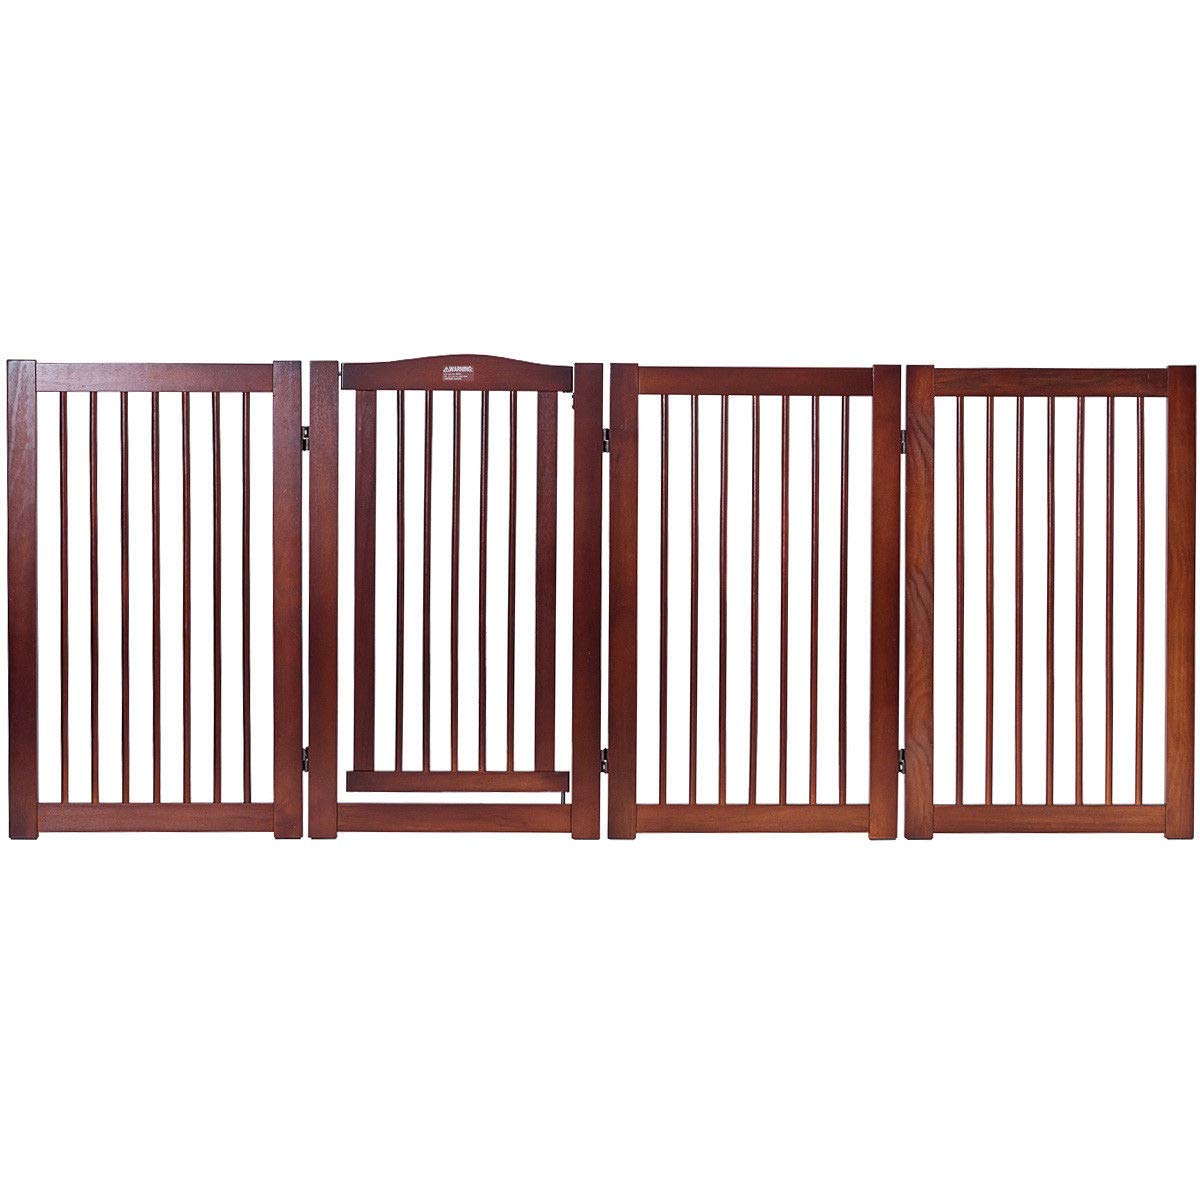 36'' Configurable Folding Free Standing Panel Wood Pet Dog Safety Fence